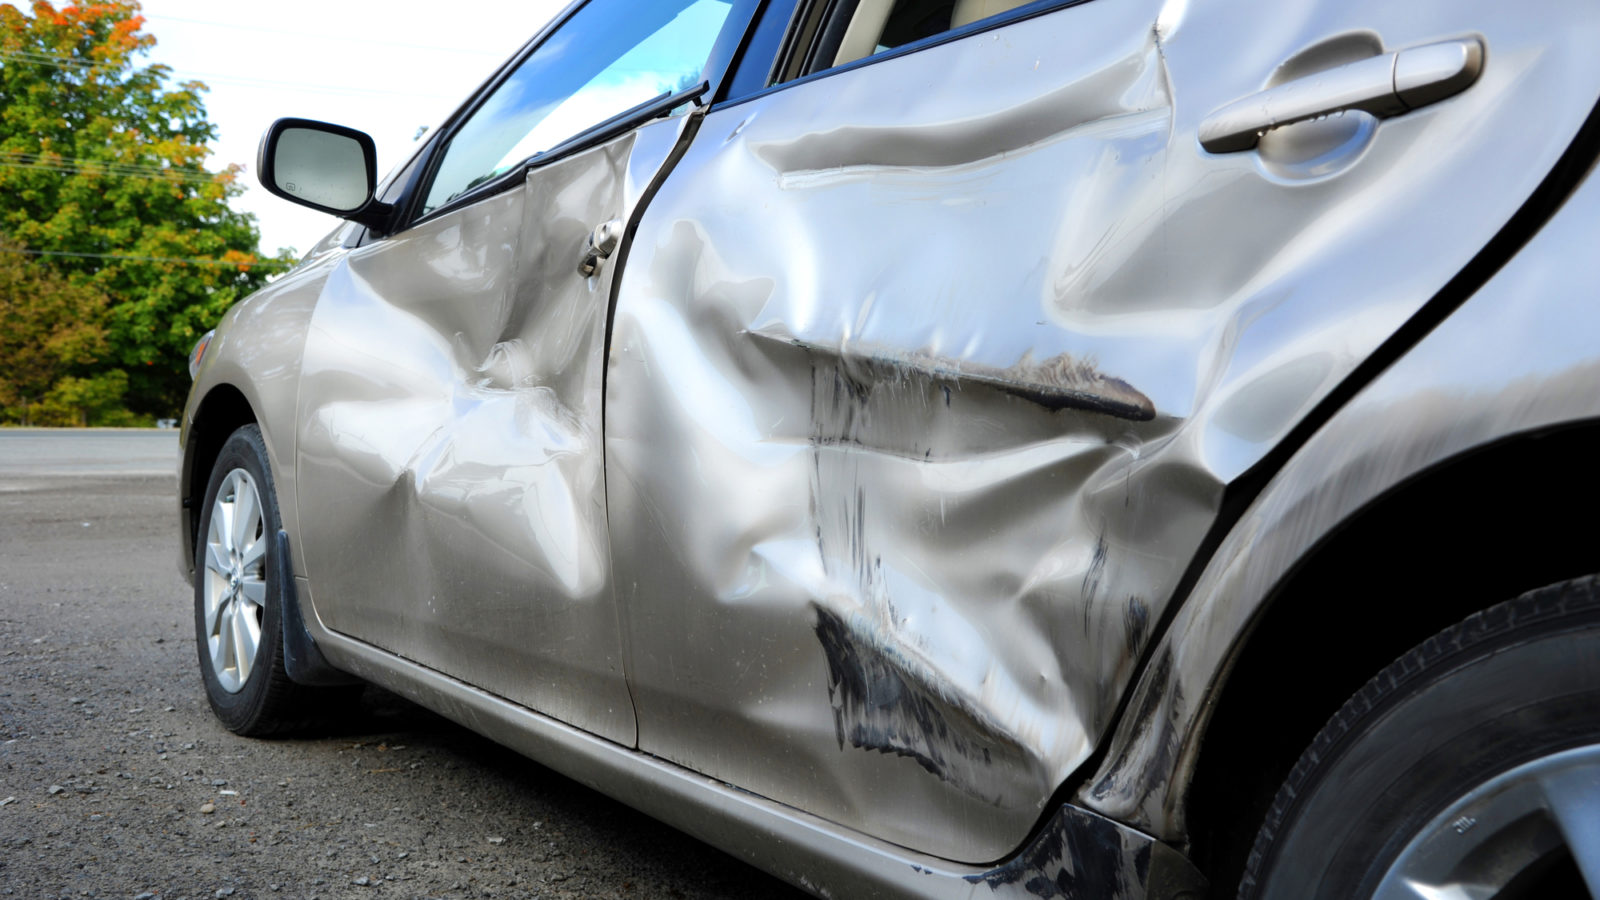 hit and run accident lawyer Scottsdale Arizona - damaged car side panel